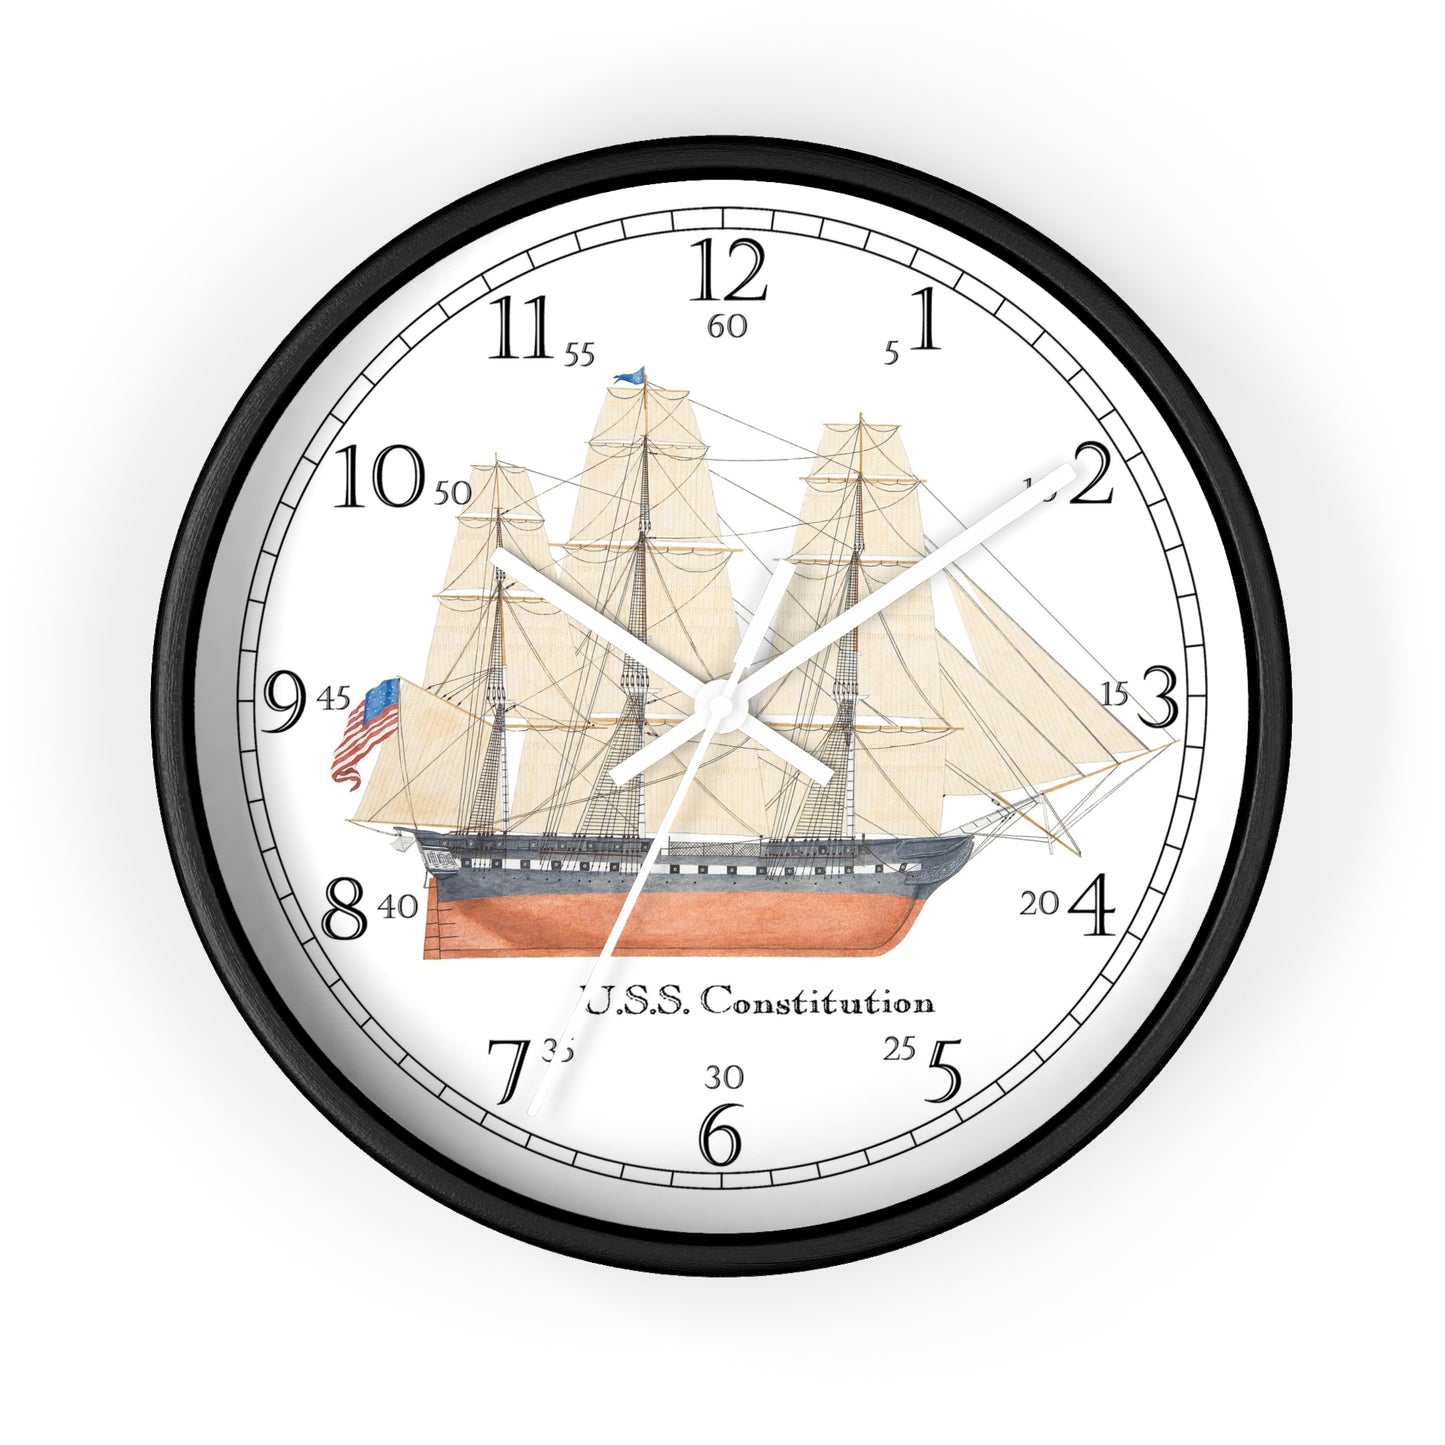 Frigate U.S.S. Constitution English Numeral Clock